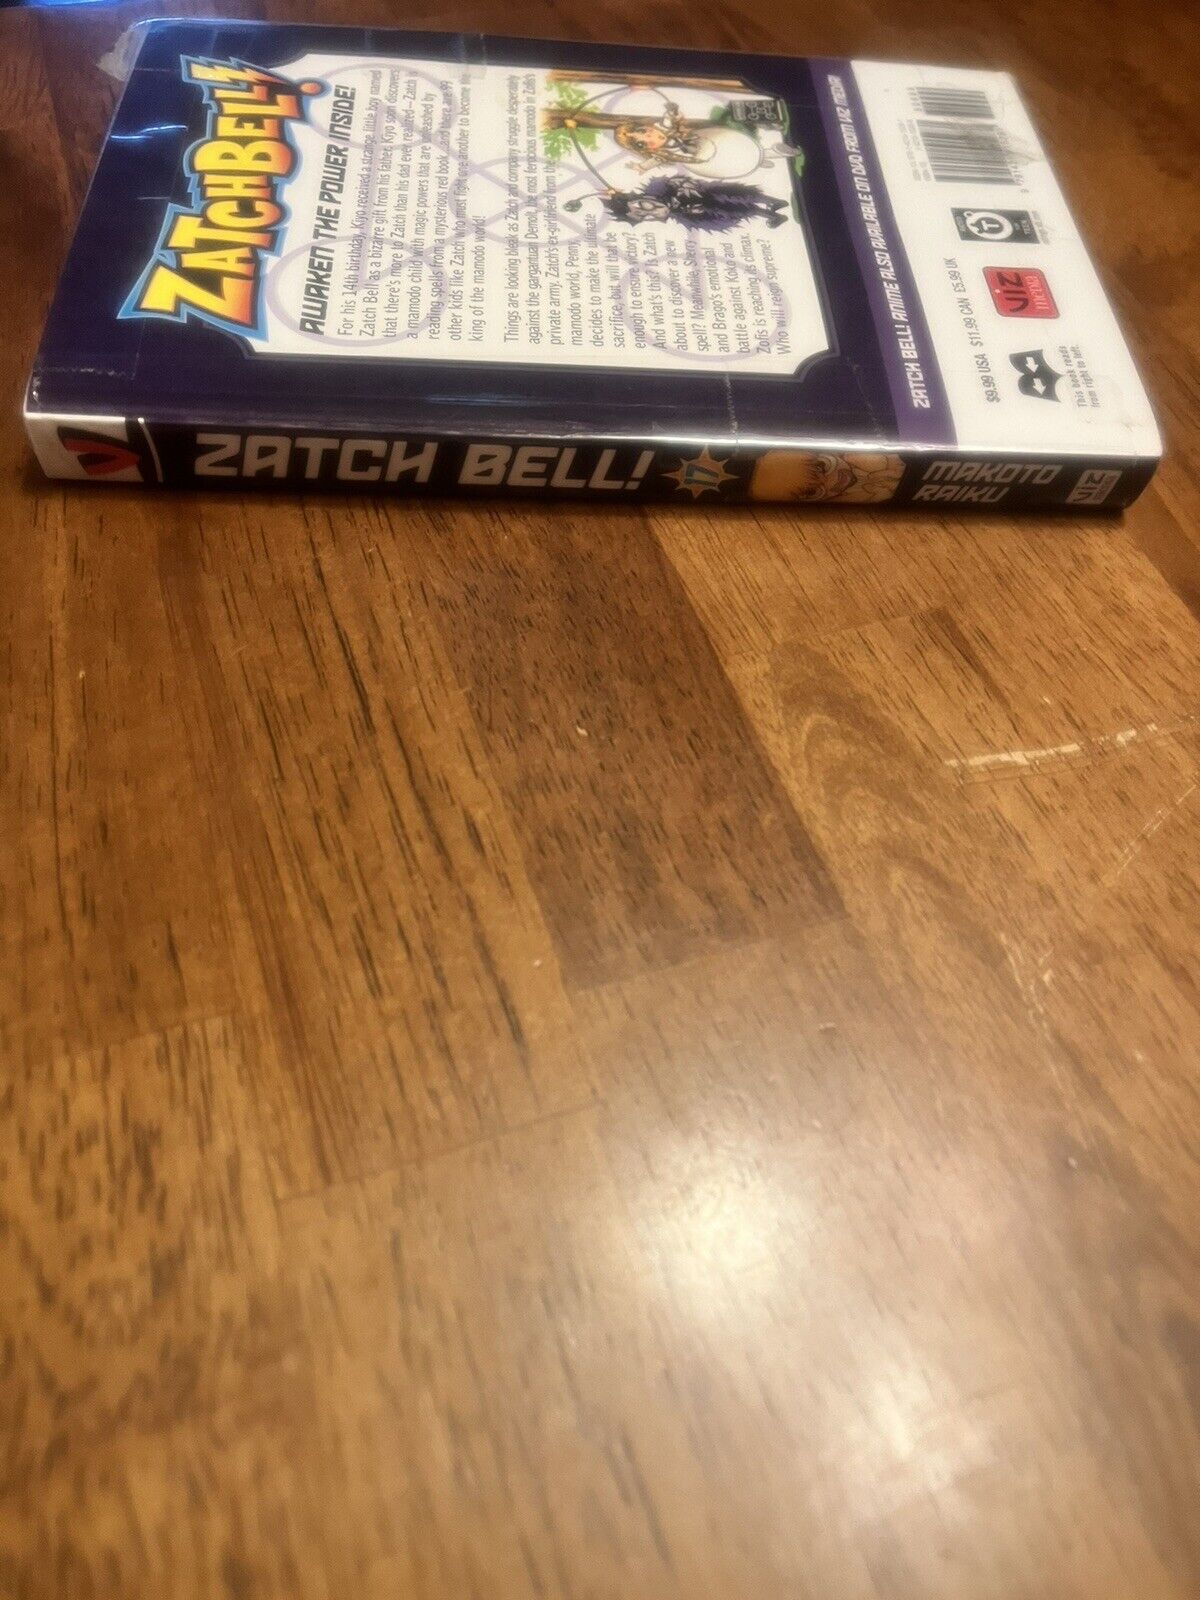 Zatch Bell! volume 17 by Makoto Raiku (2008) oop AC Manga graphic novel